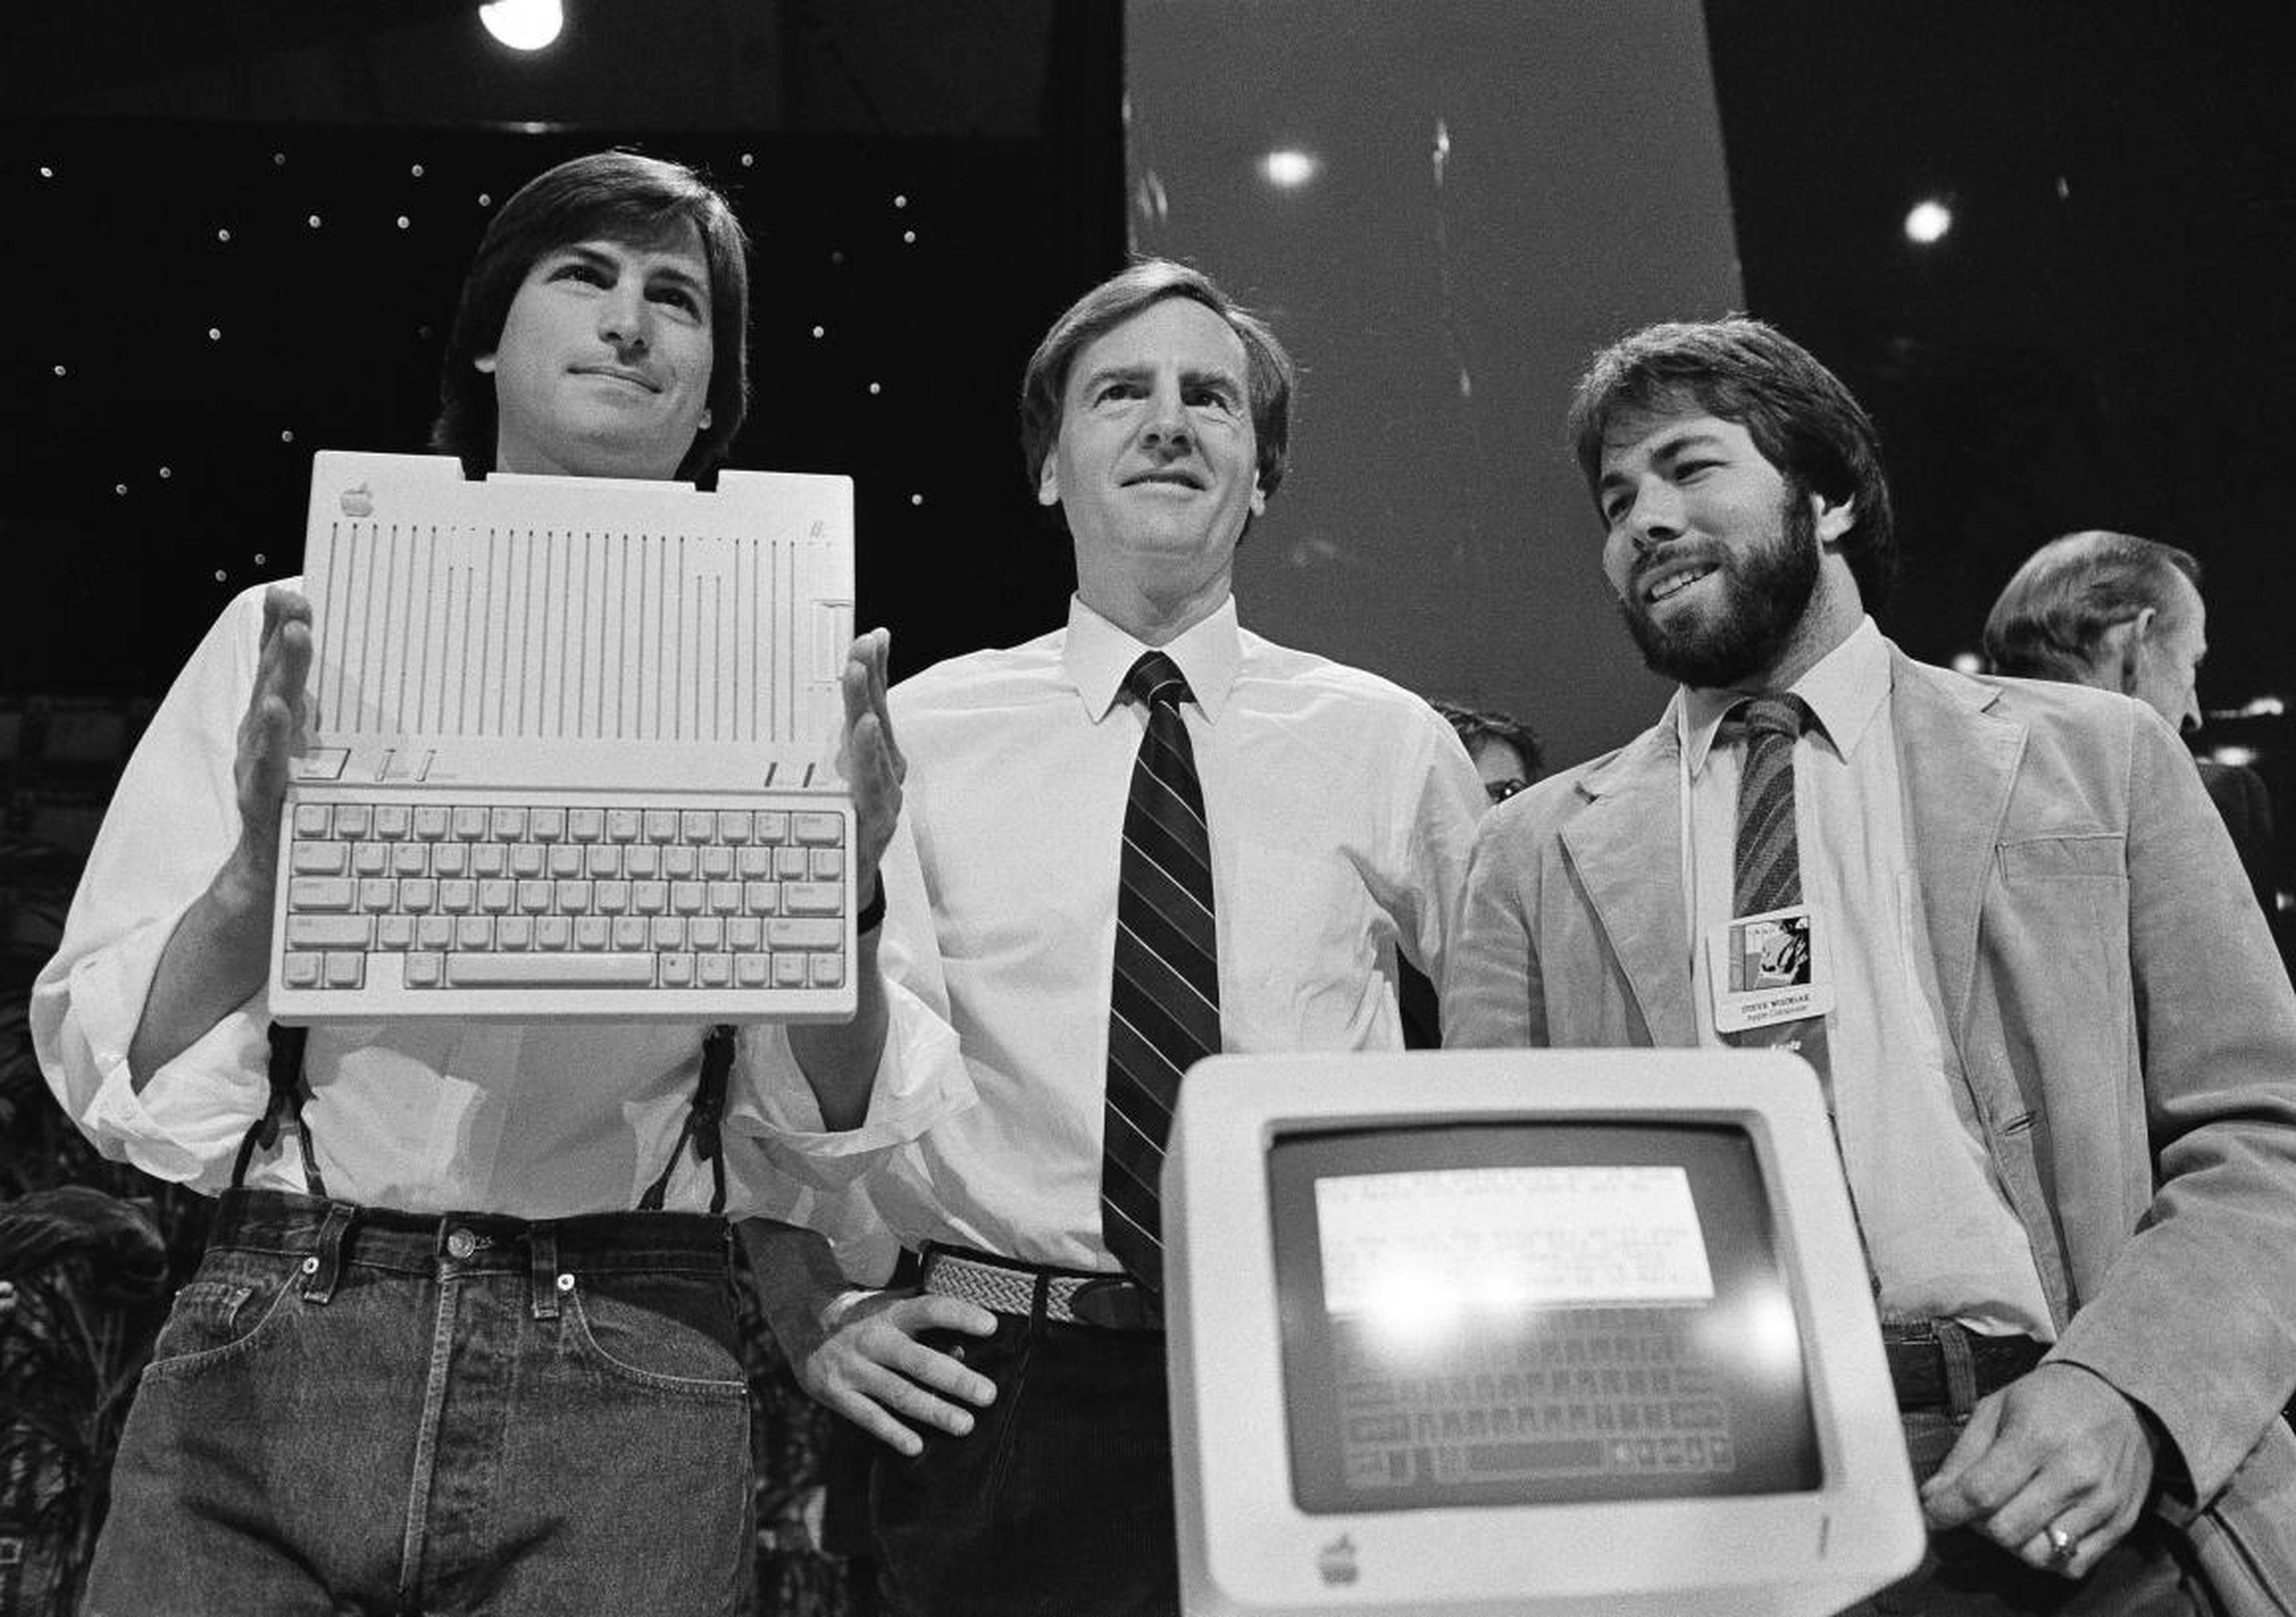 Steve Jobs, John Sculley, and Steve Wozniak launch the Apple IIc in 1984.